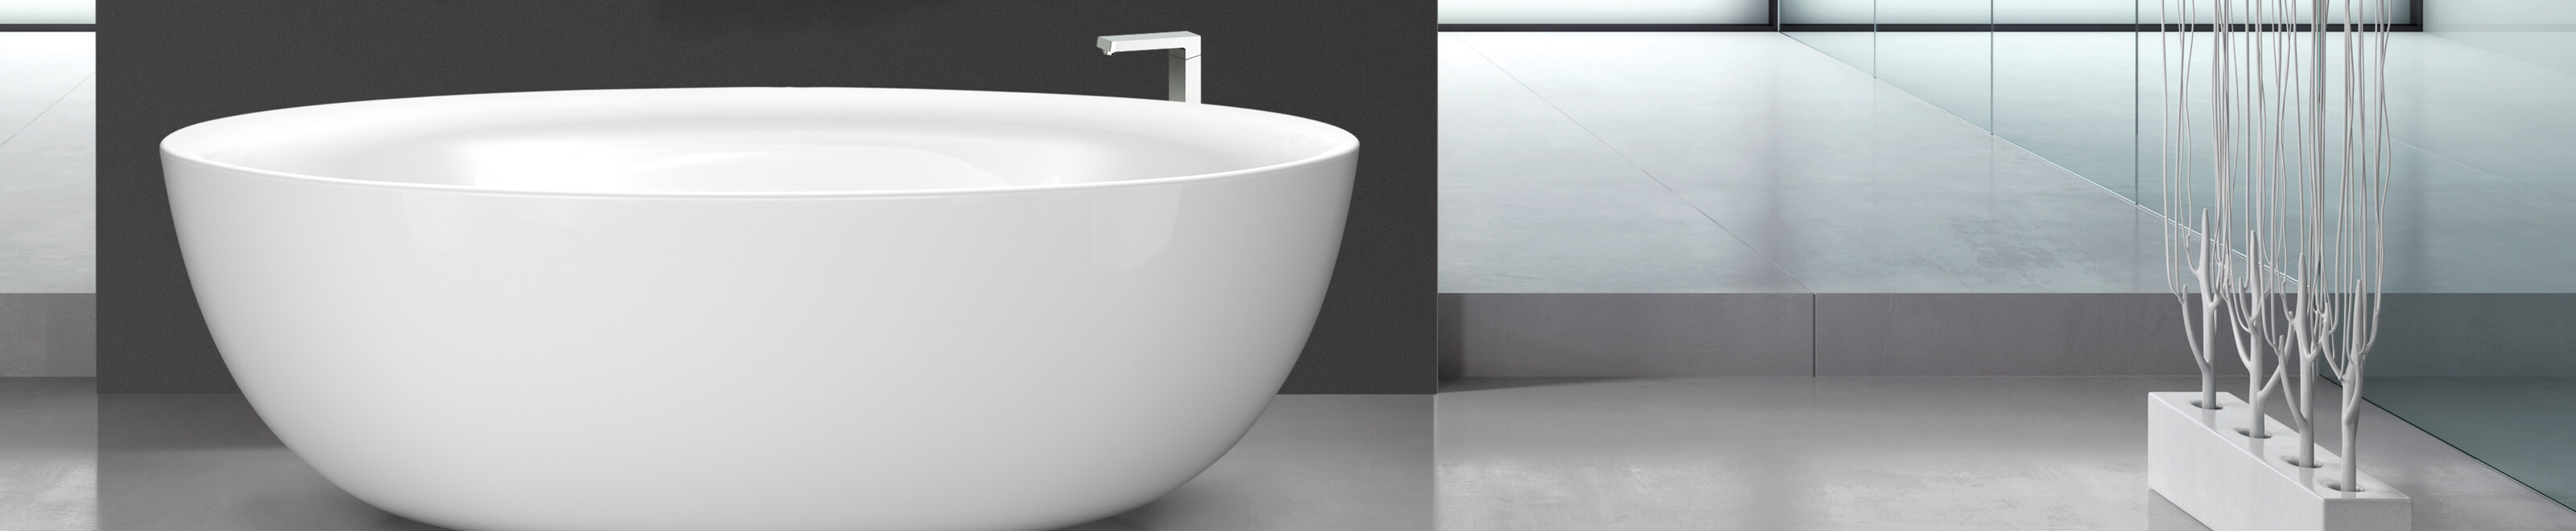 contemporary freestanding bath